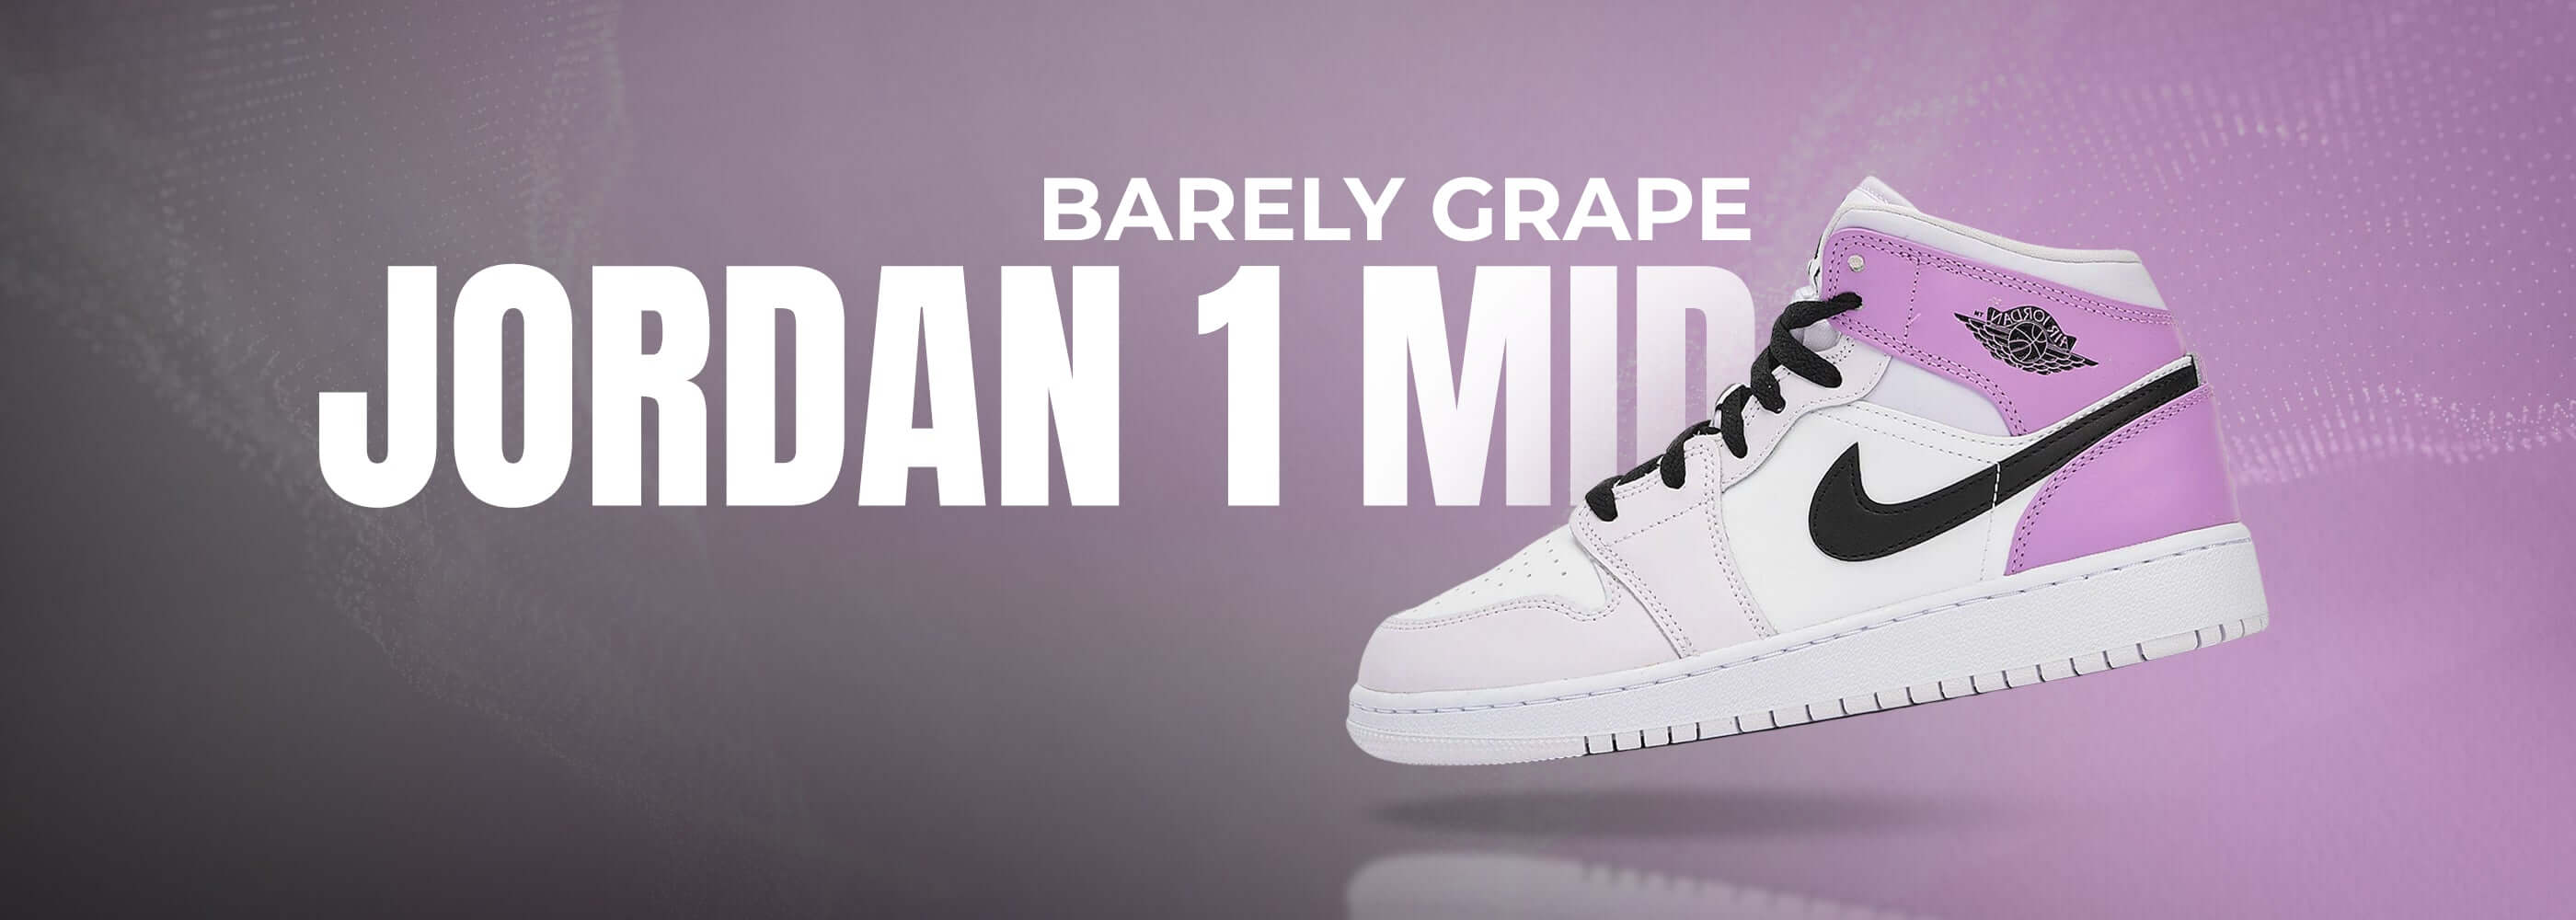 Jordan 1 Mid  Barely Grape (GS)